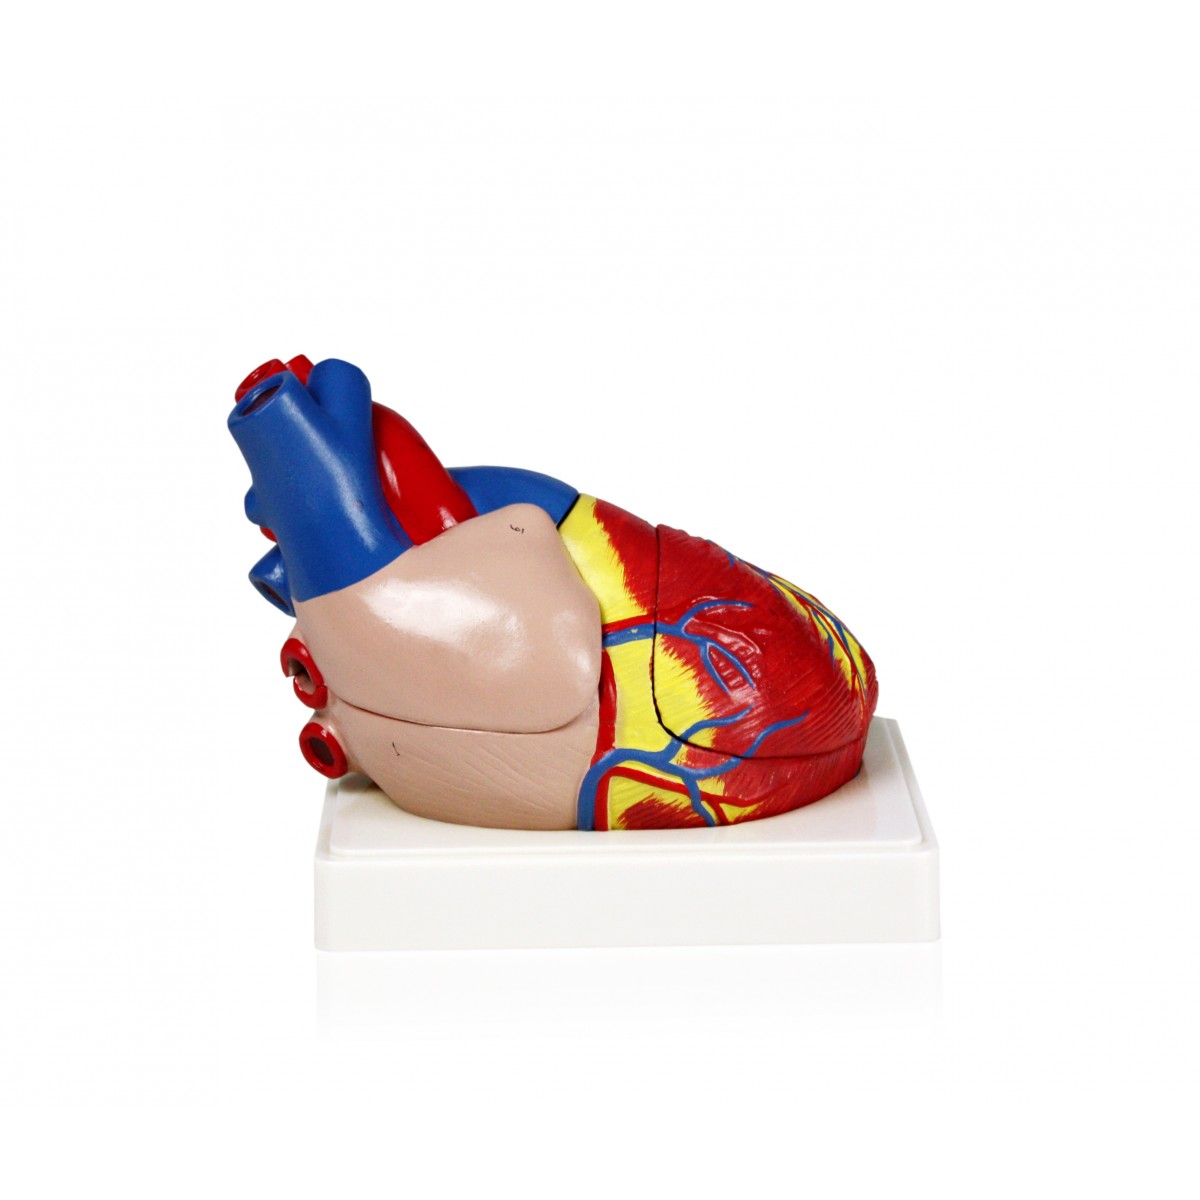 Walter Heart Model, 3X Life Size - 3 Parts - Circulatory System - Human ...